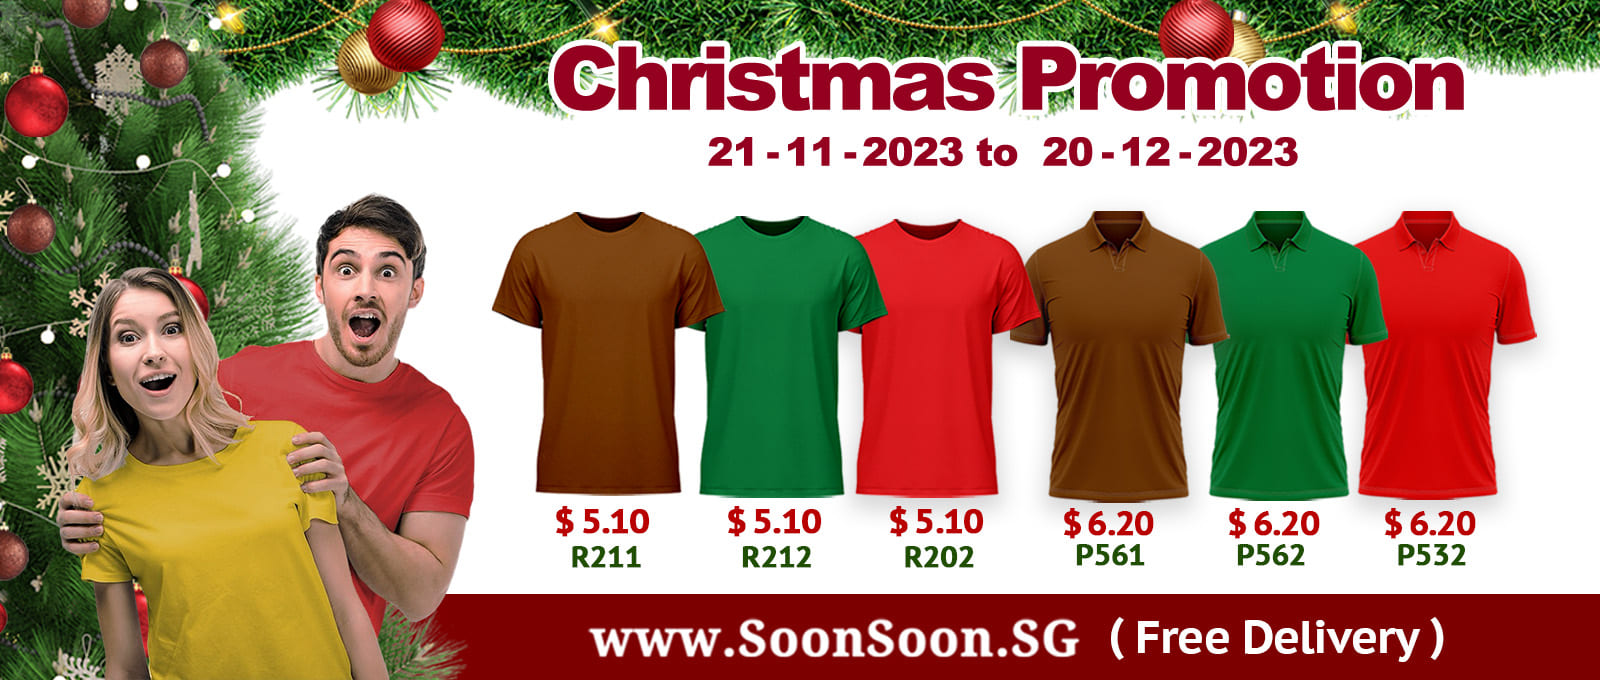 Christmas Promo SoonSoon.SG